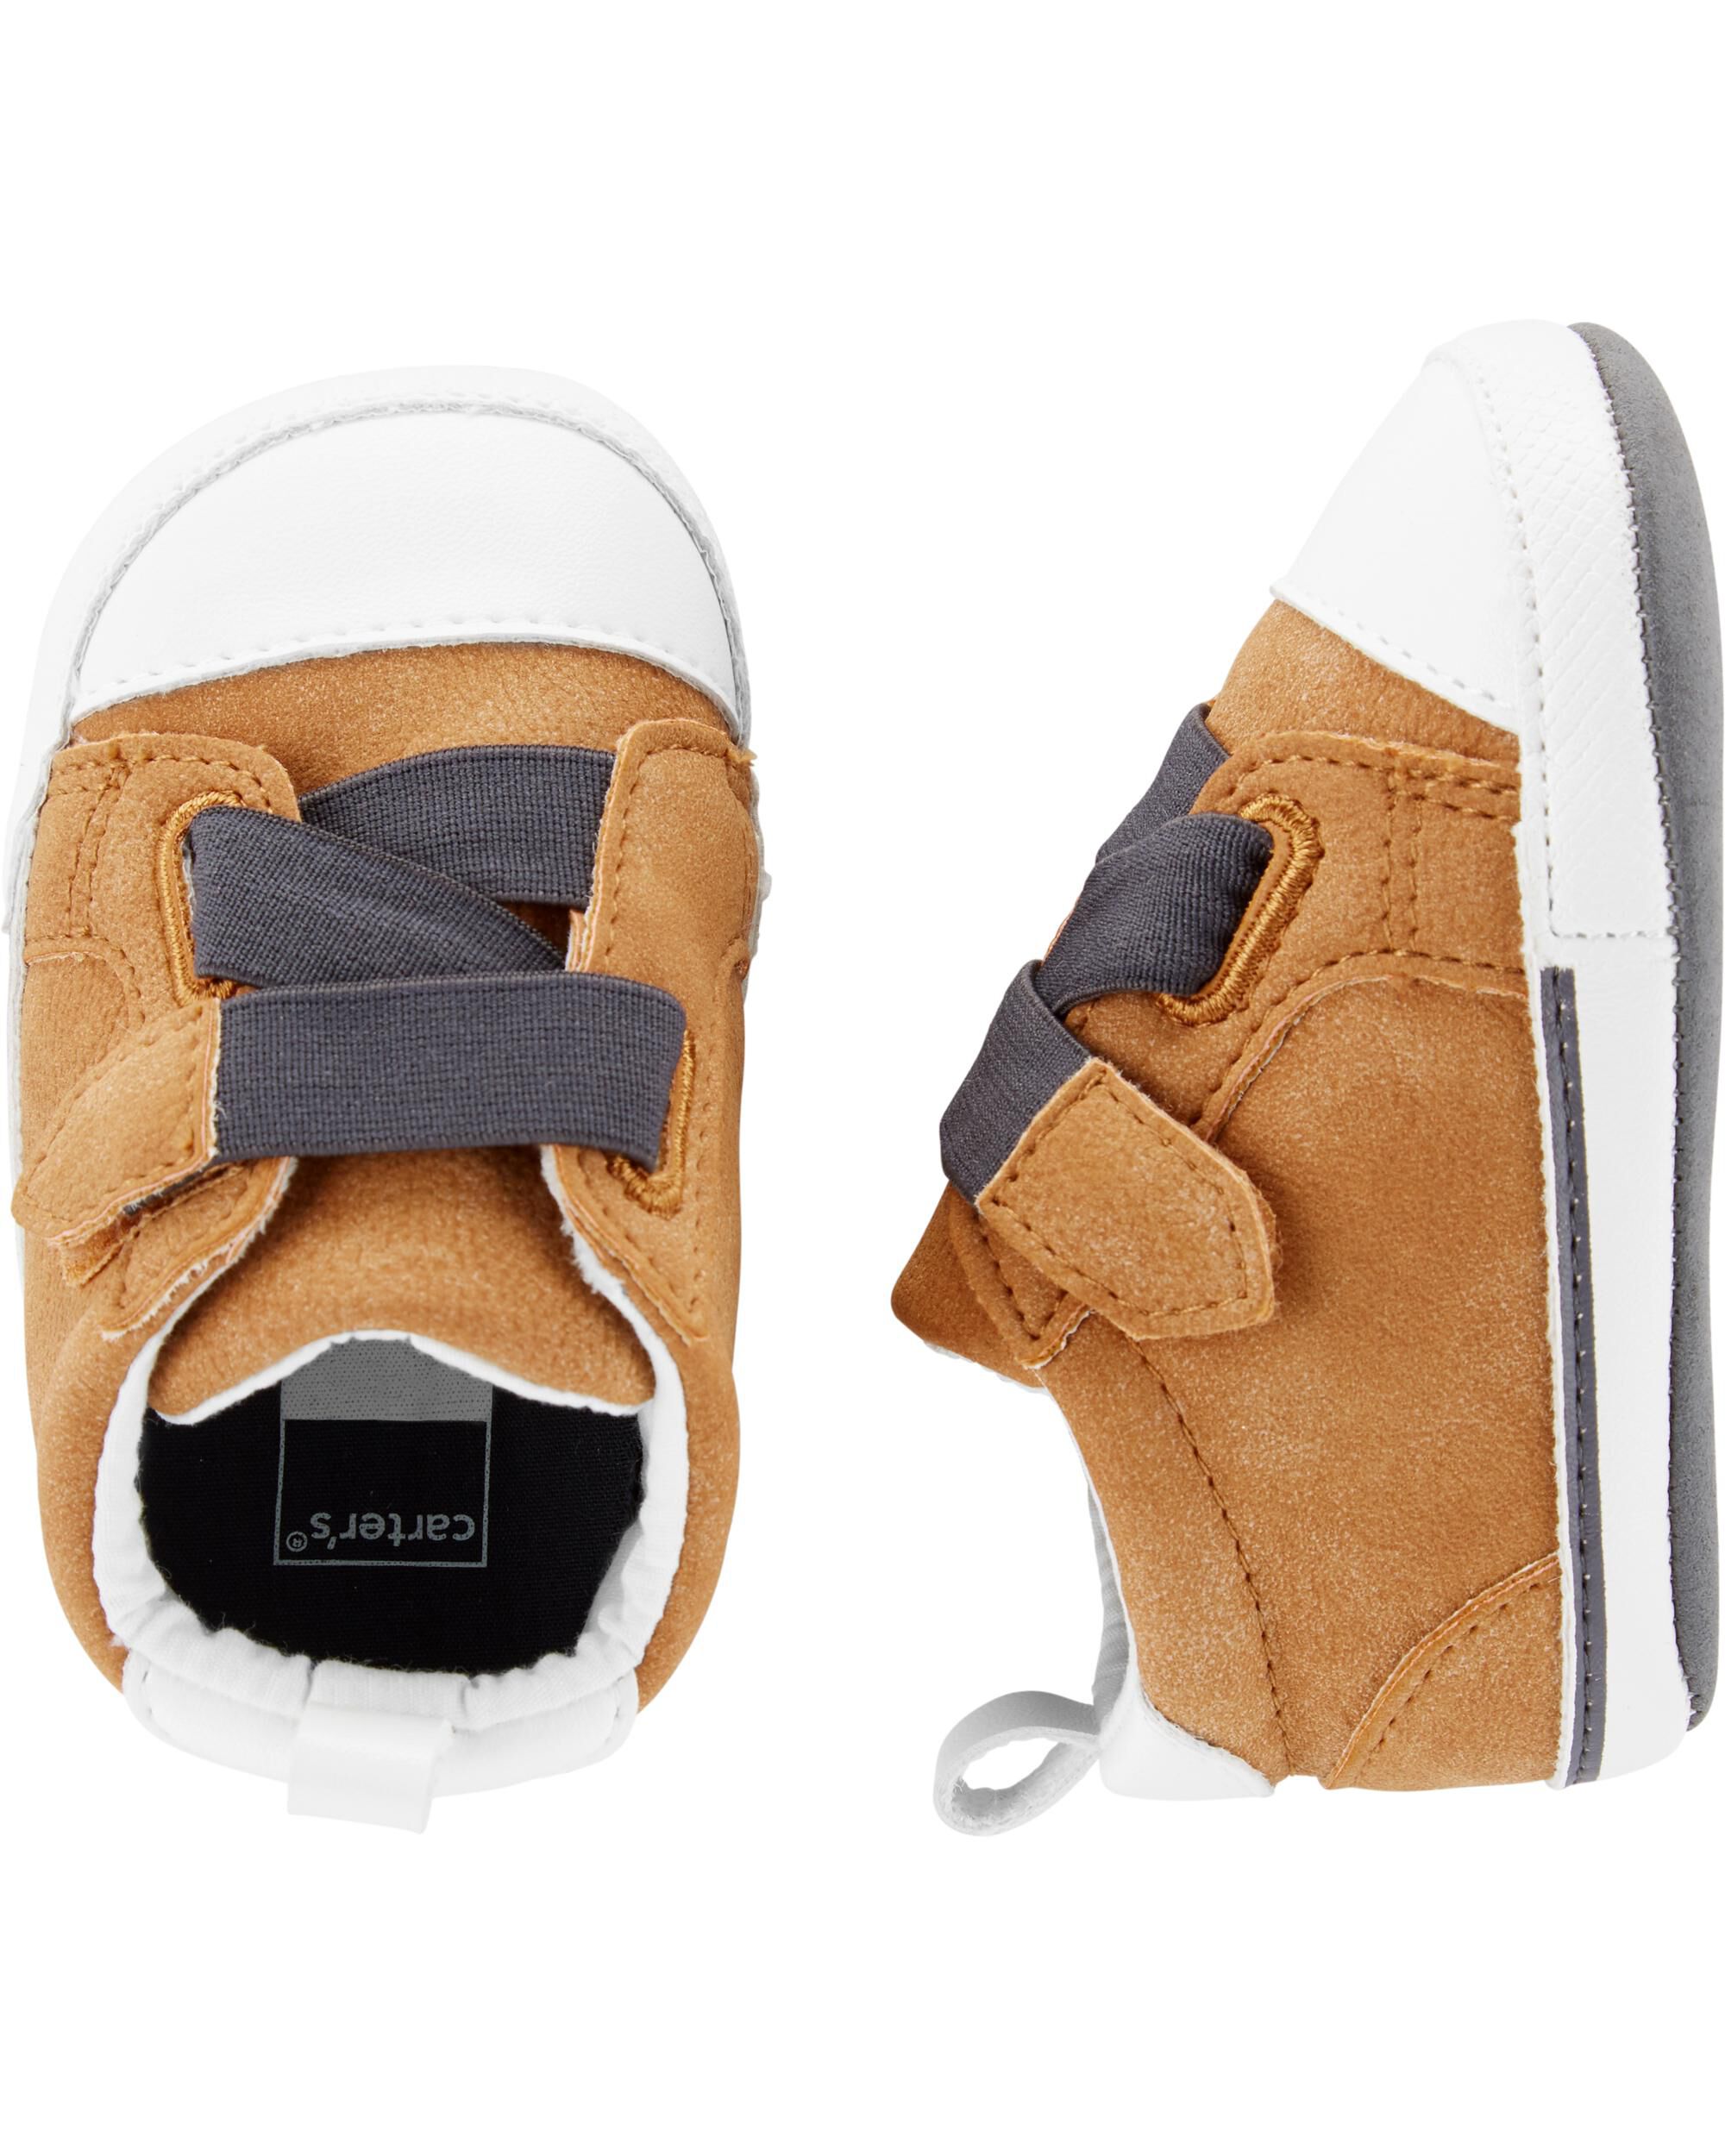 Carter's Sneaker Baby Shoes | carters.com